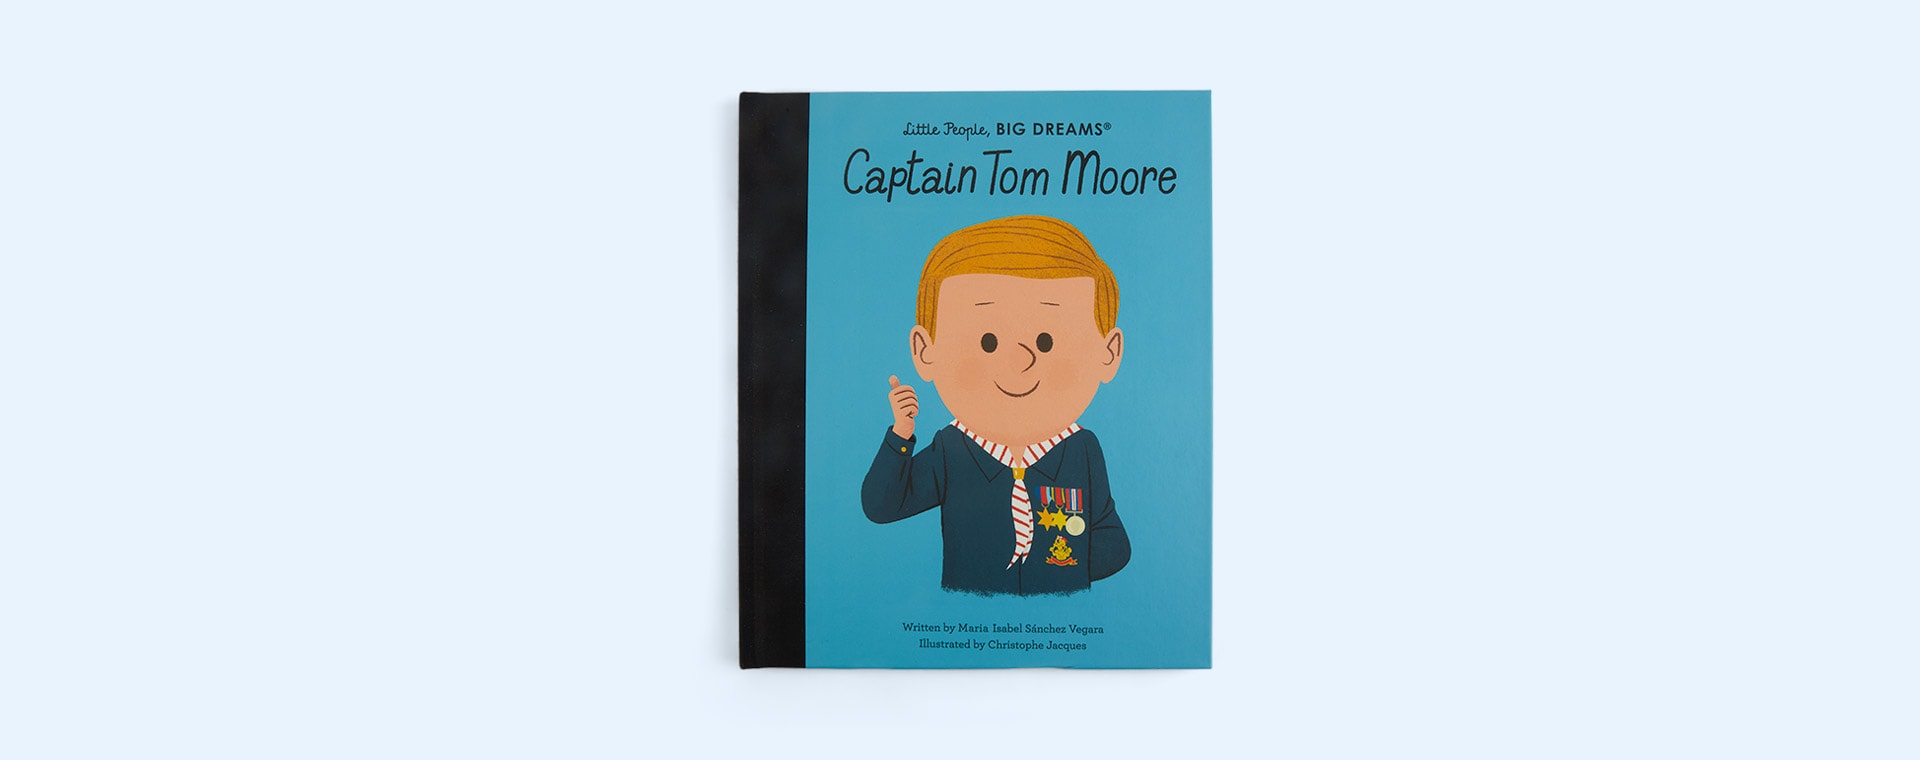 Multi bookspeed Little People Big Dreams: Captain Tom Moore